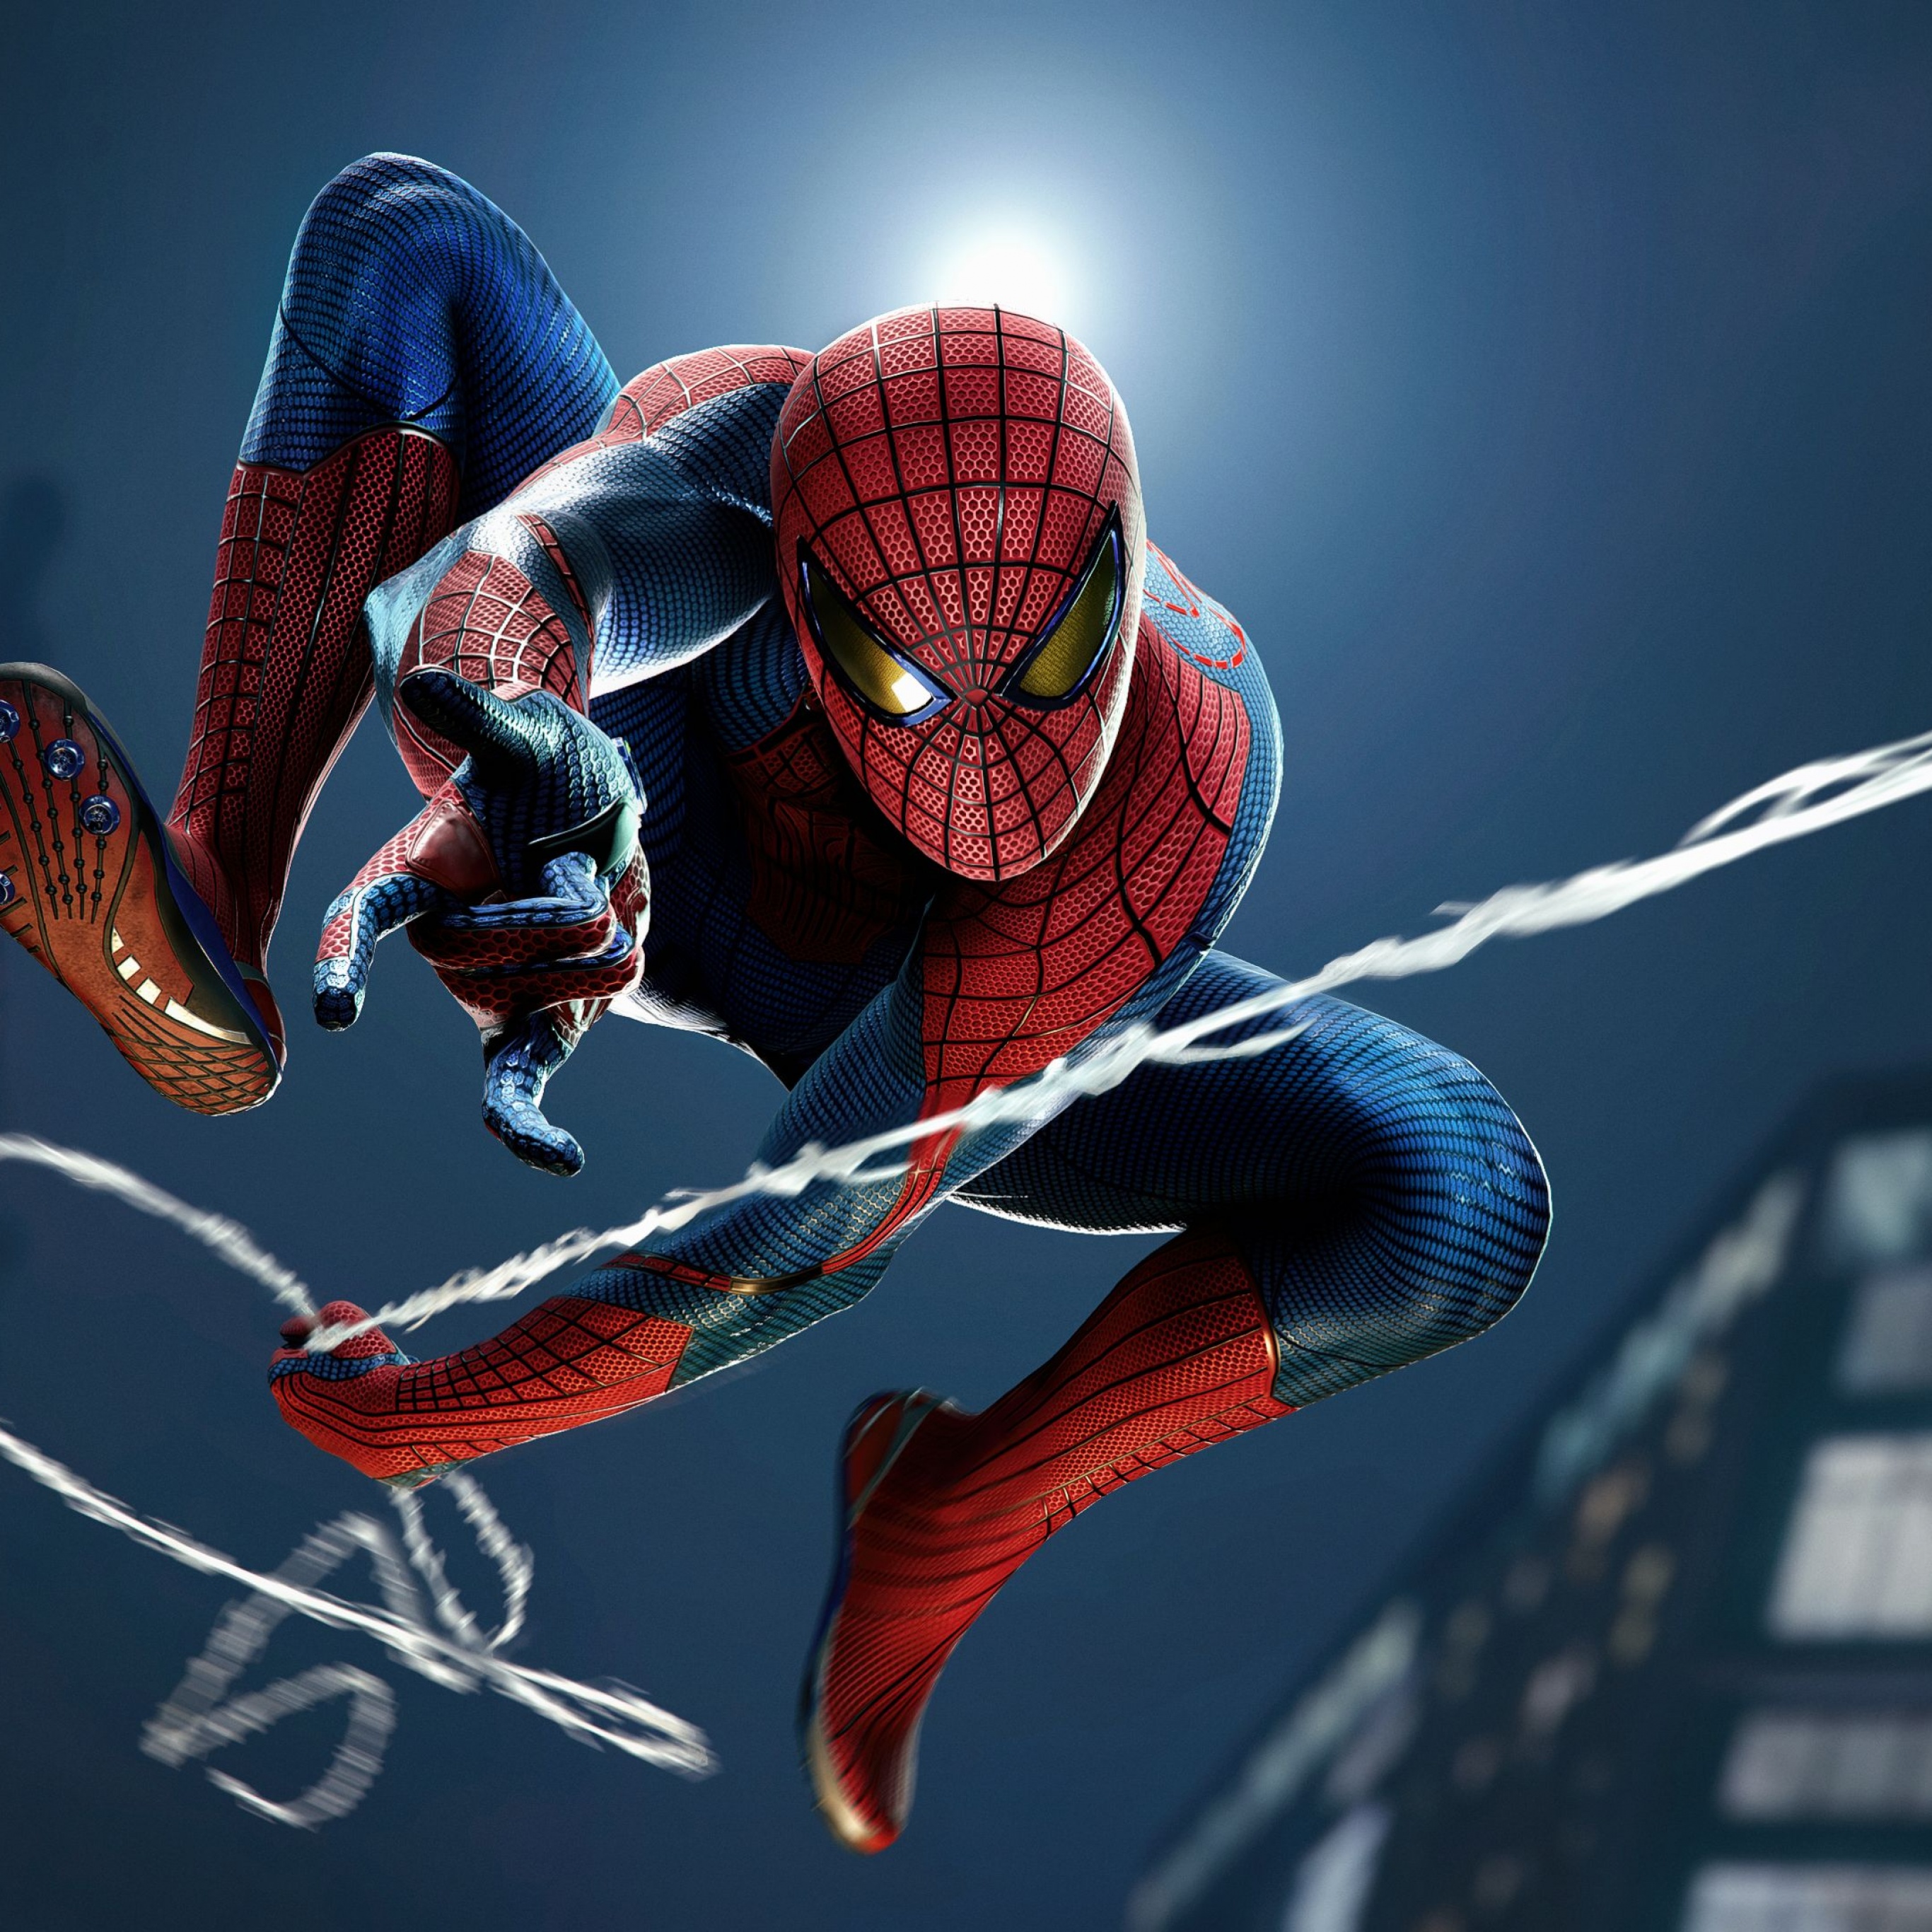 33 Spiderman Live Wallpapers Animated Wallpapers  MoeWalls